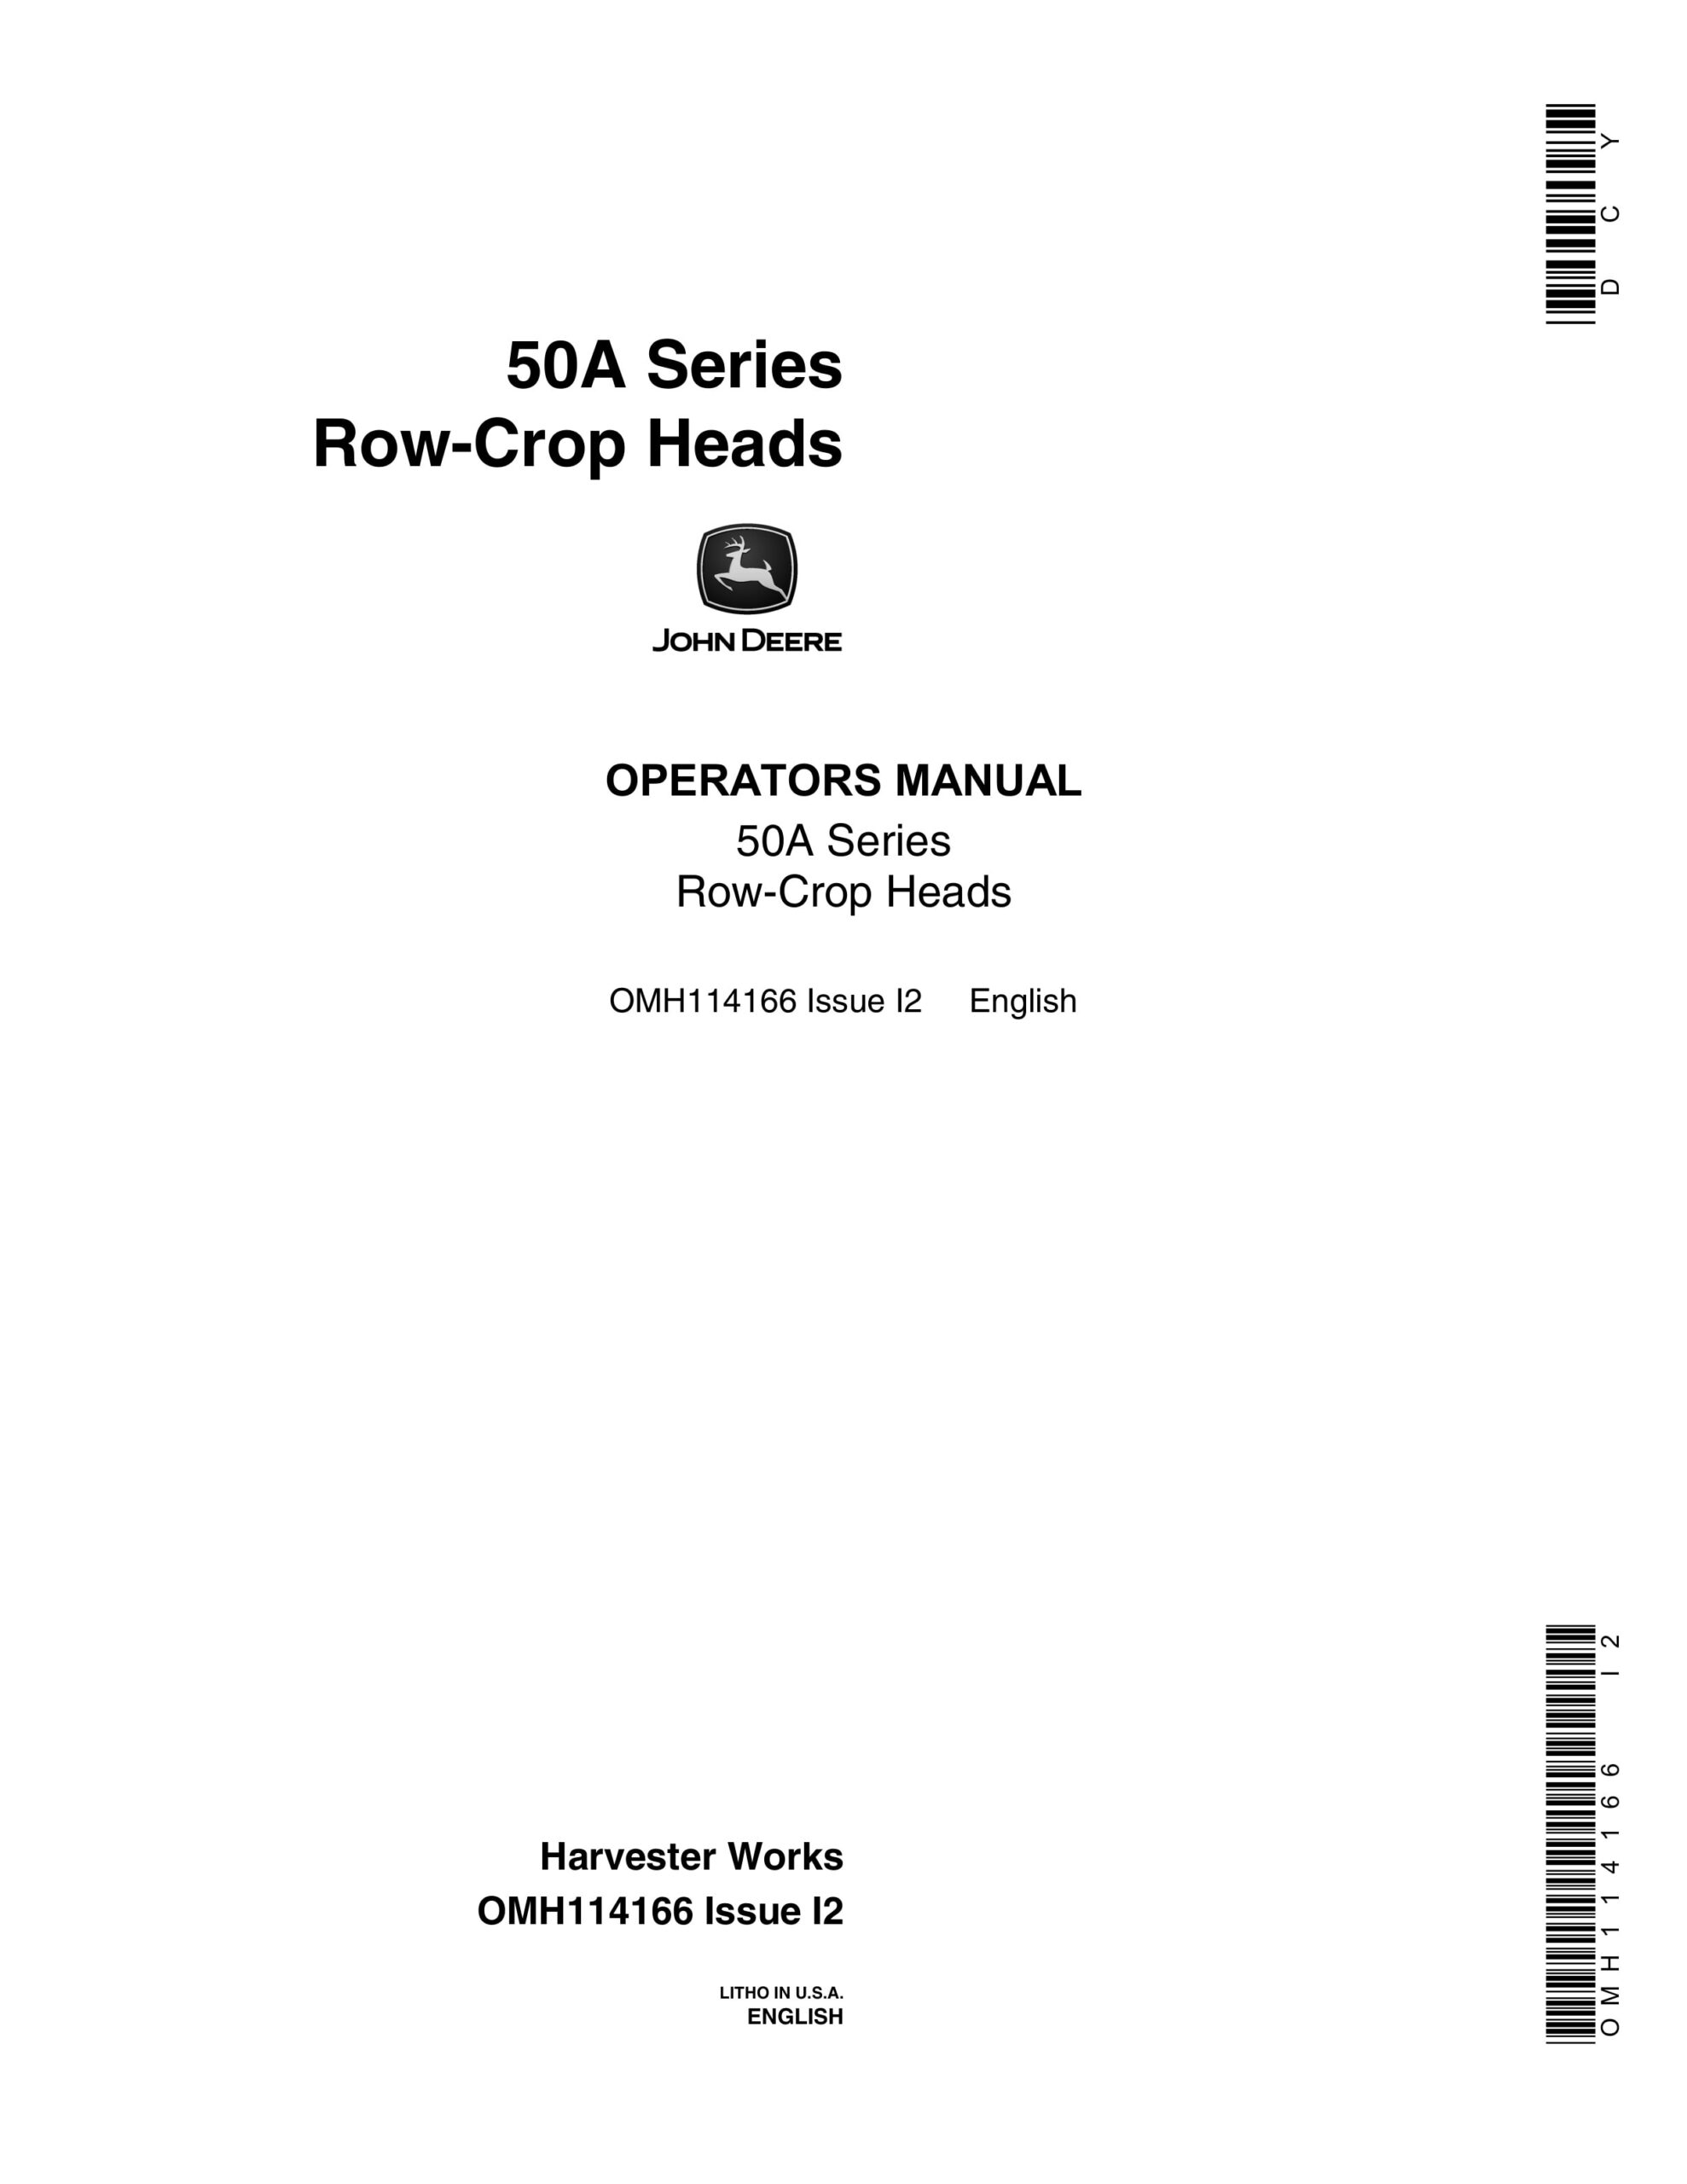 John Deere 50A Series Row-Crop Heads Operator Manual OMH114166-1